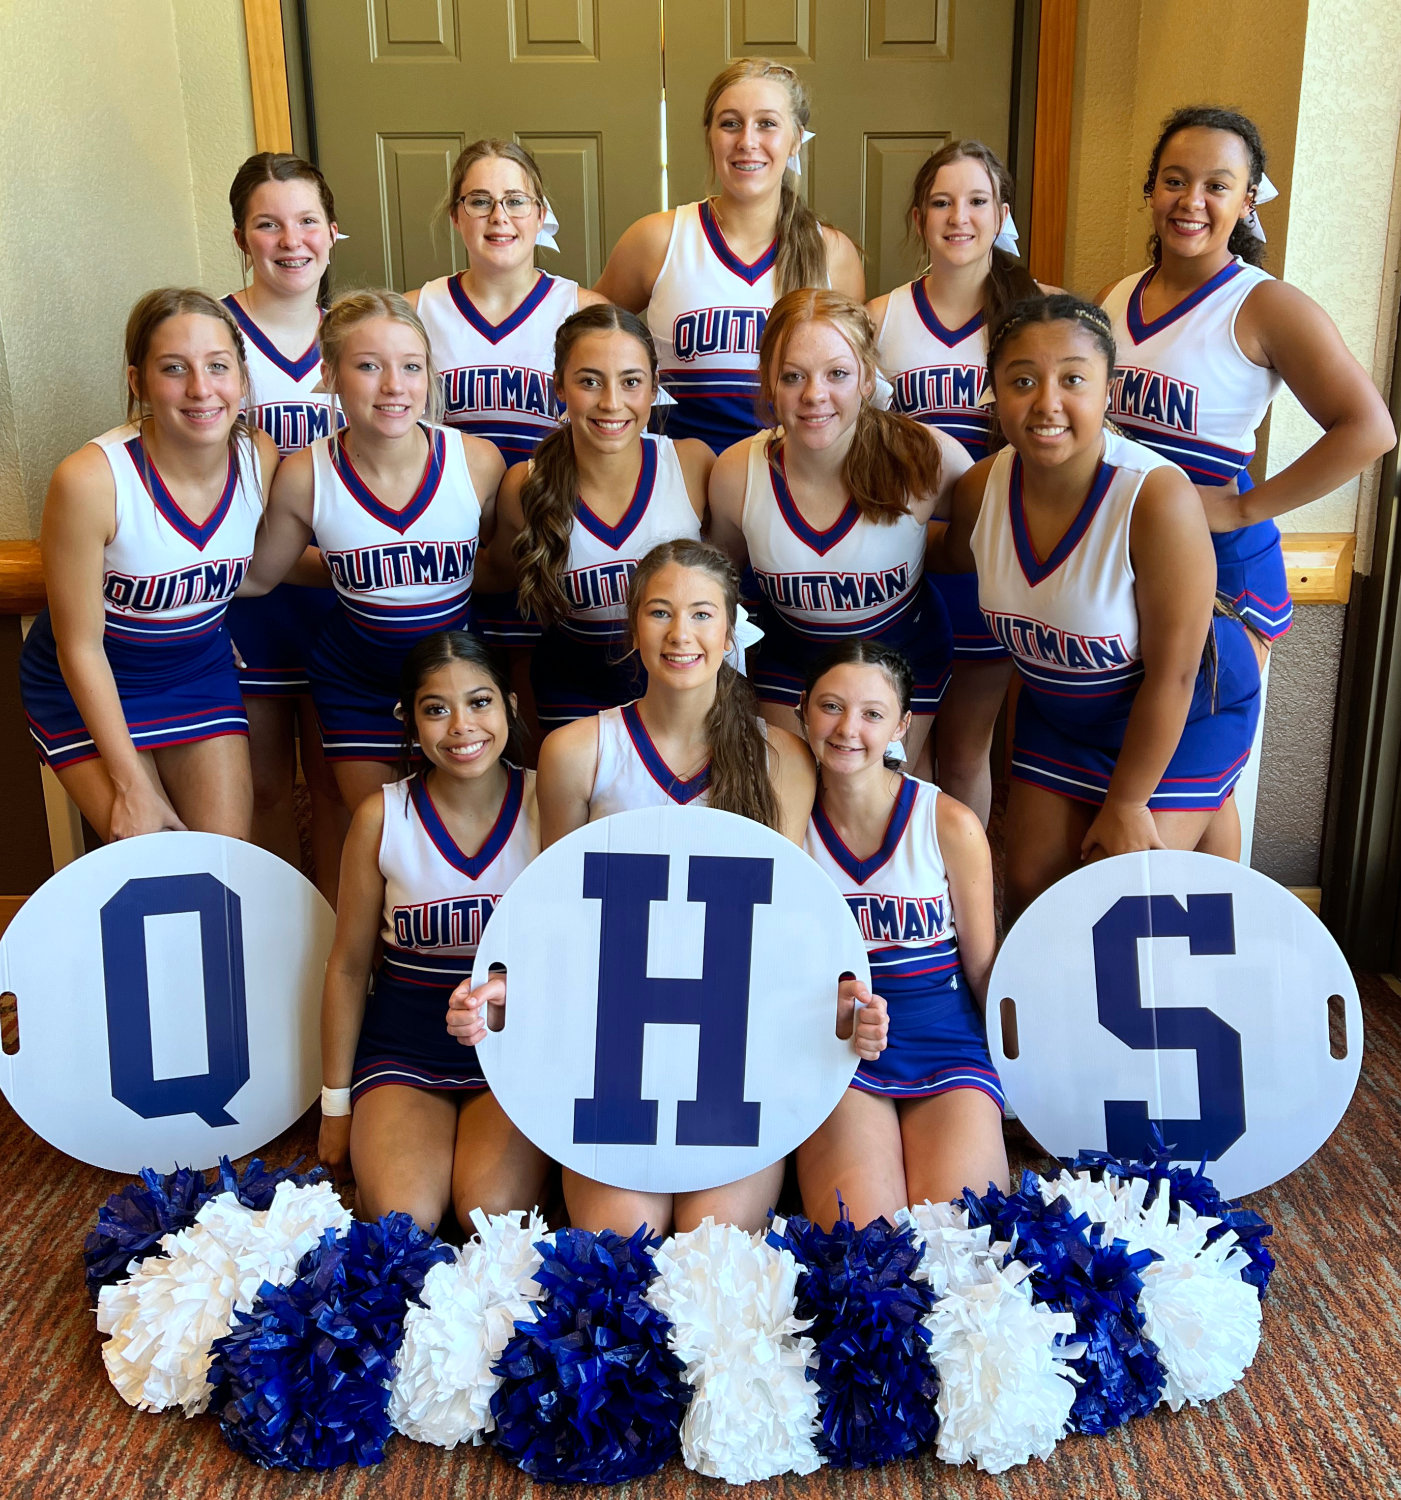 The Quitman High School cheerleaders had a successful summer camp.